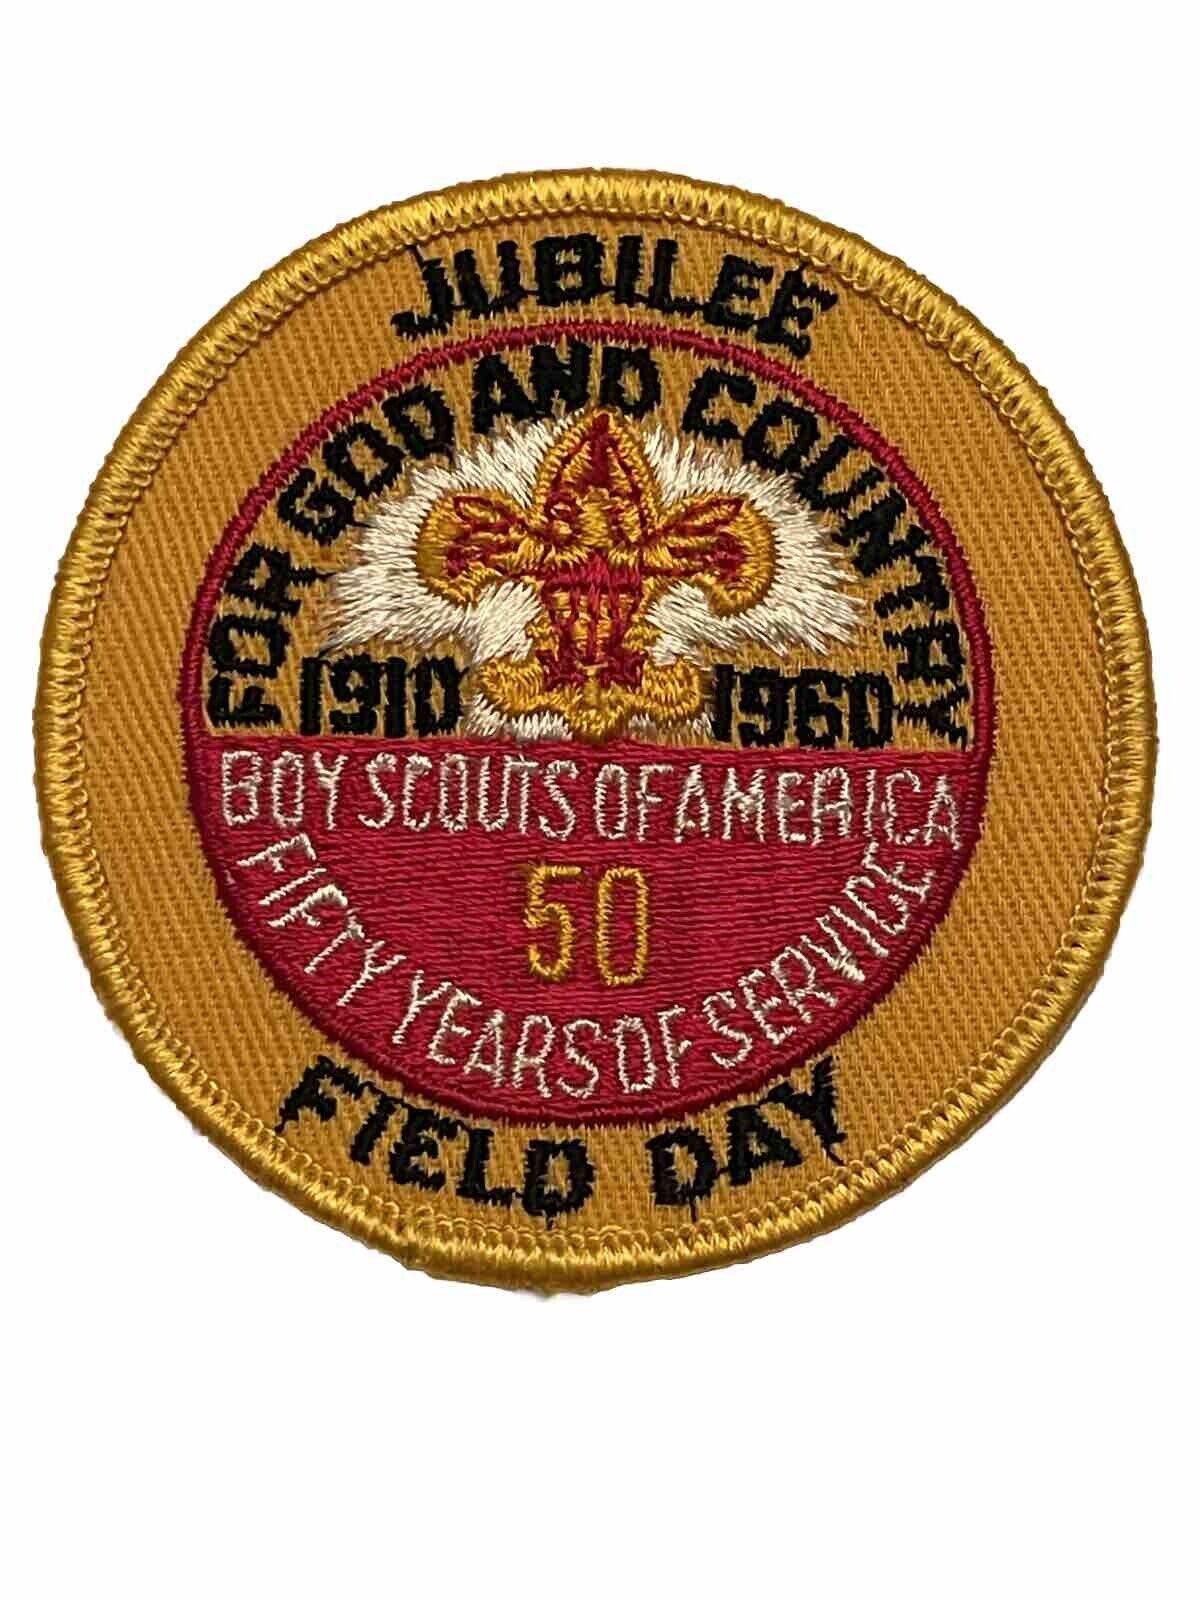 Jubilee Field Day Patch 50 Years BSA Boy Scouts Of America Badge Service Vtg